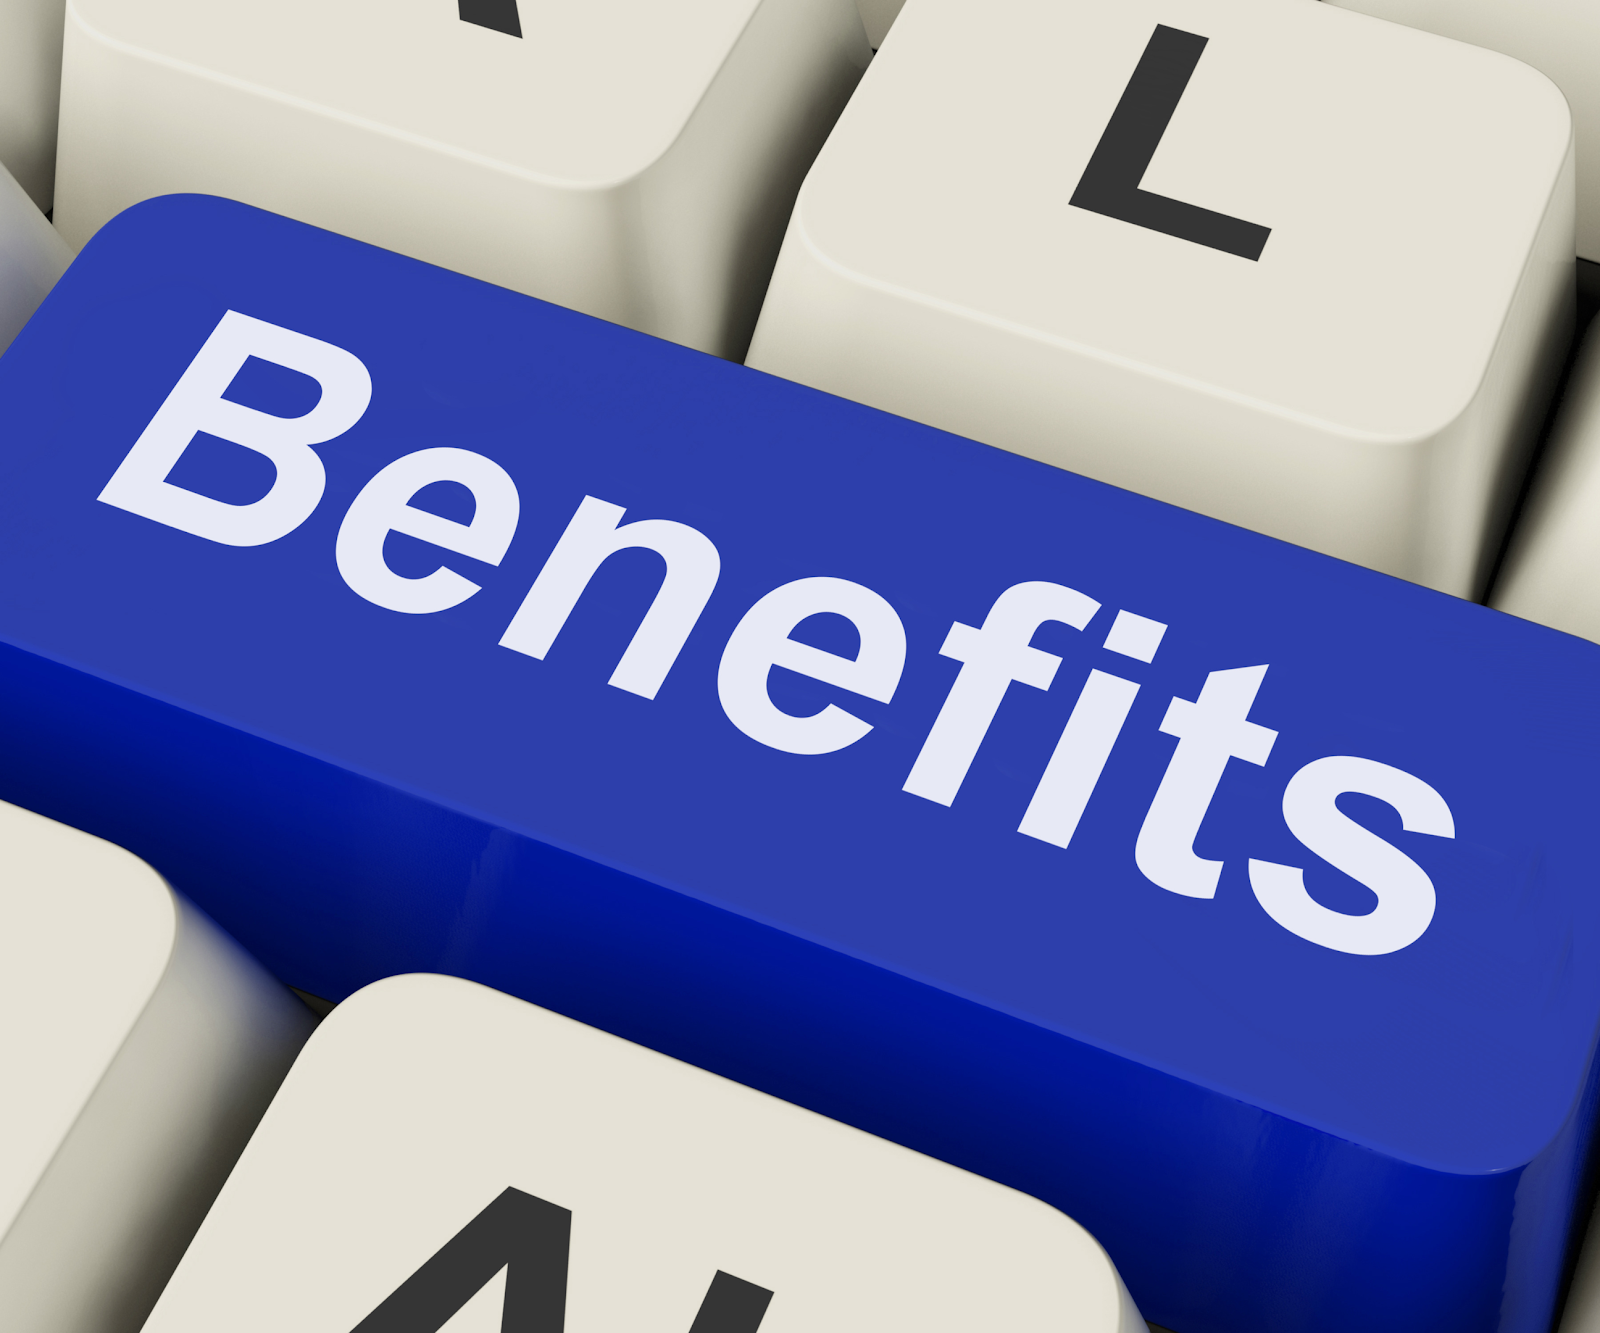 A blue key on a keyboard indicating "Benefits."